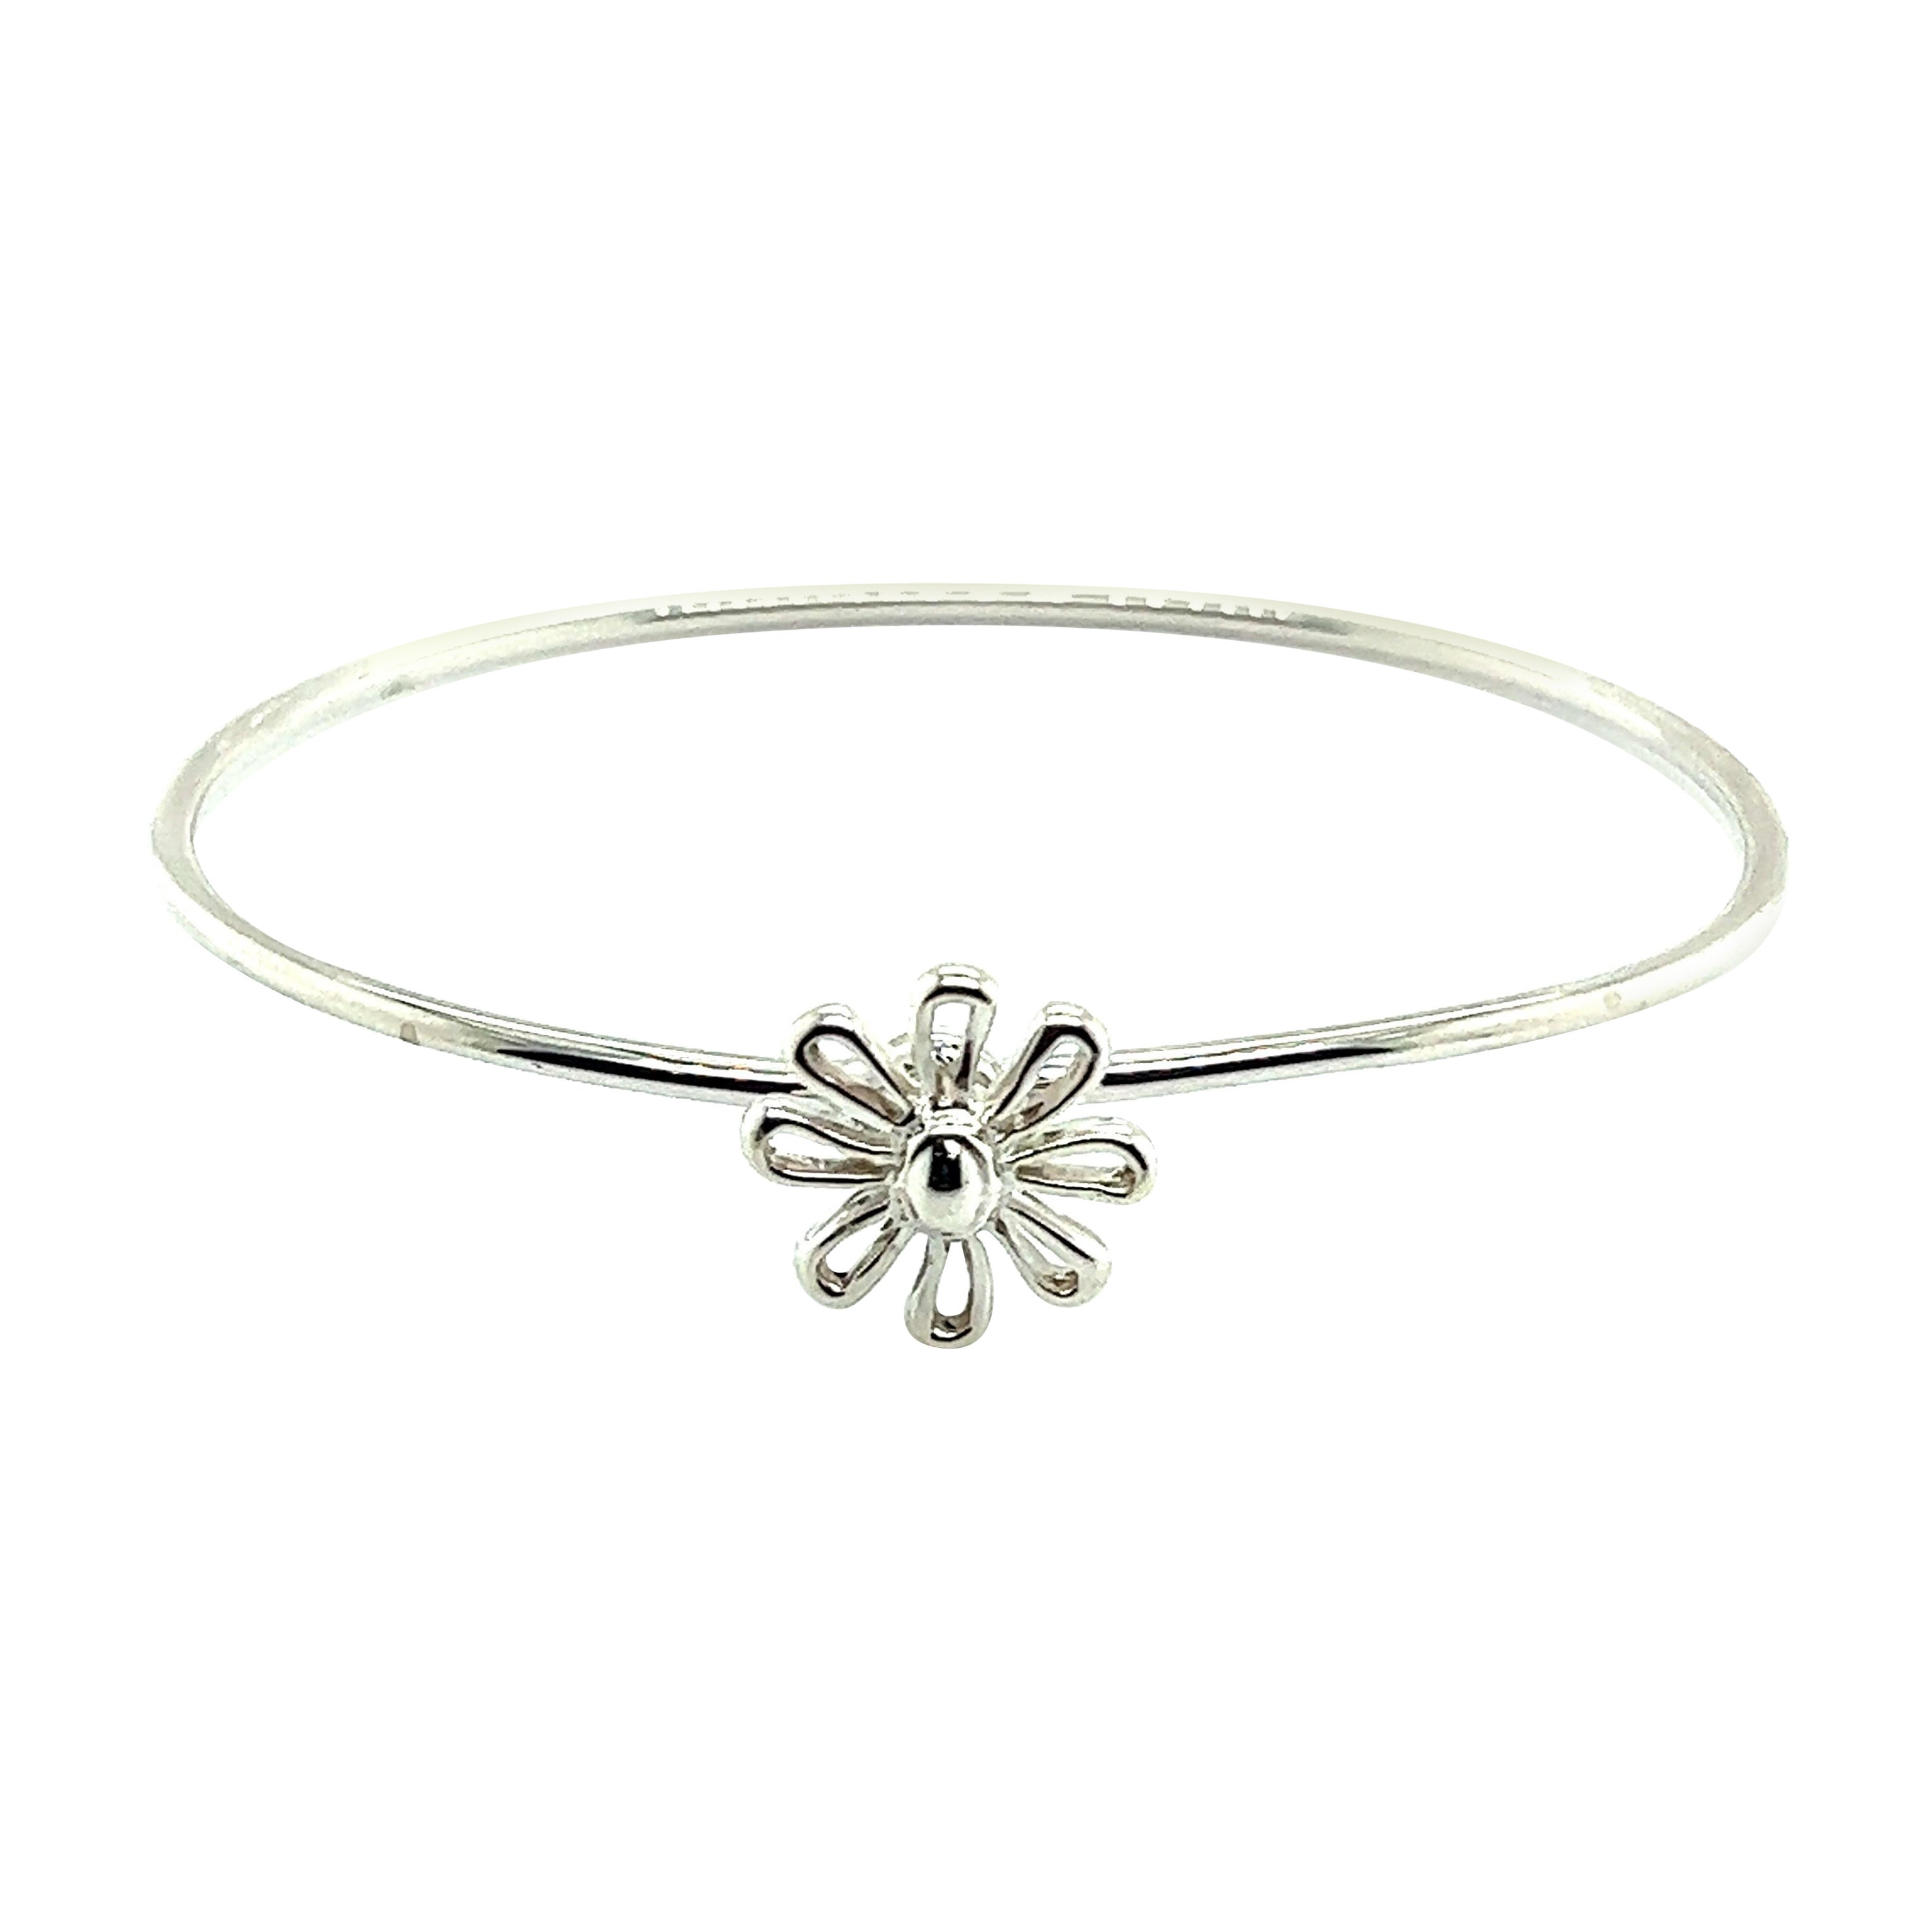 Tiffany & Co Estate Flower Bangle Bracelet M 7.5" By Paloma Picasso Silver 